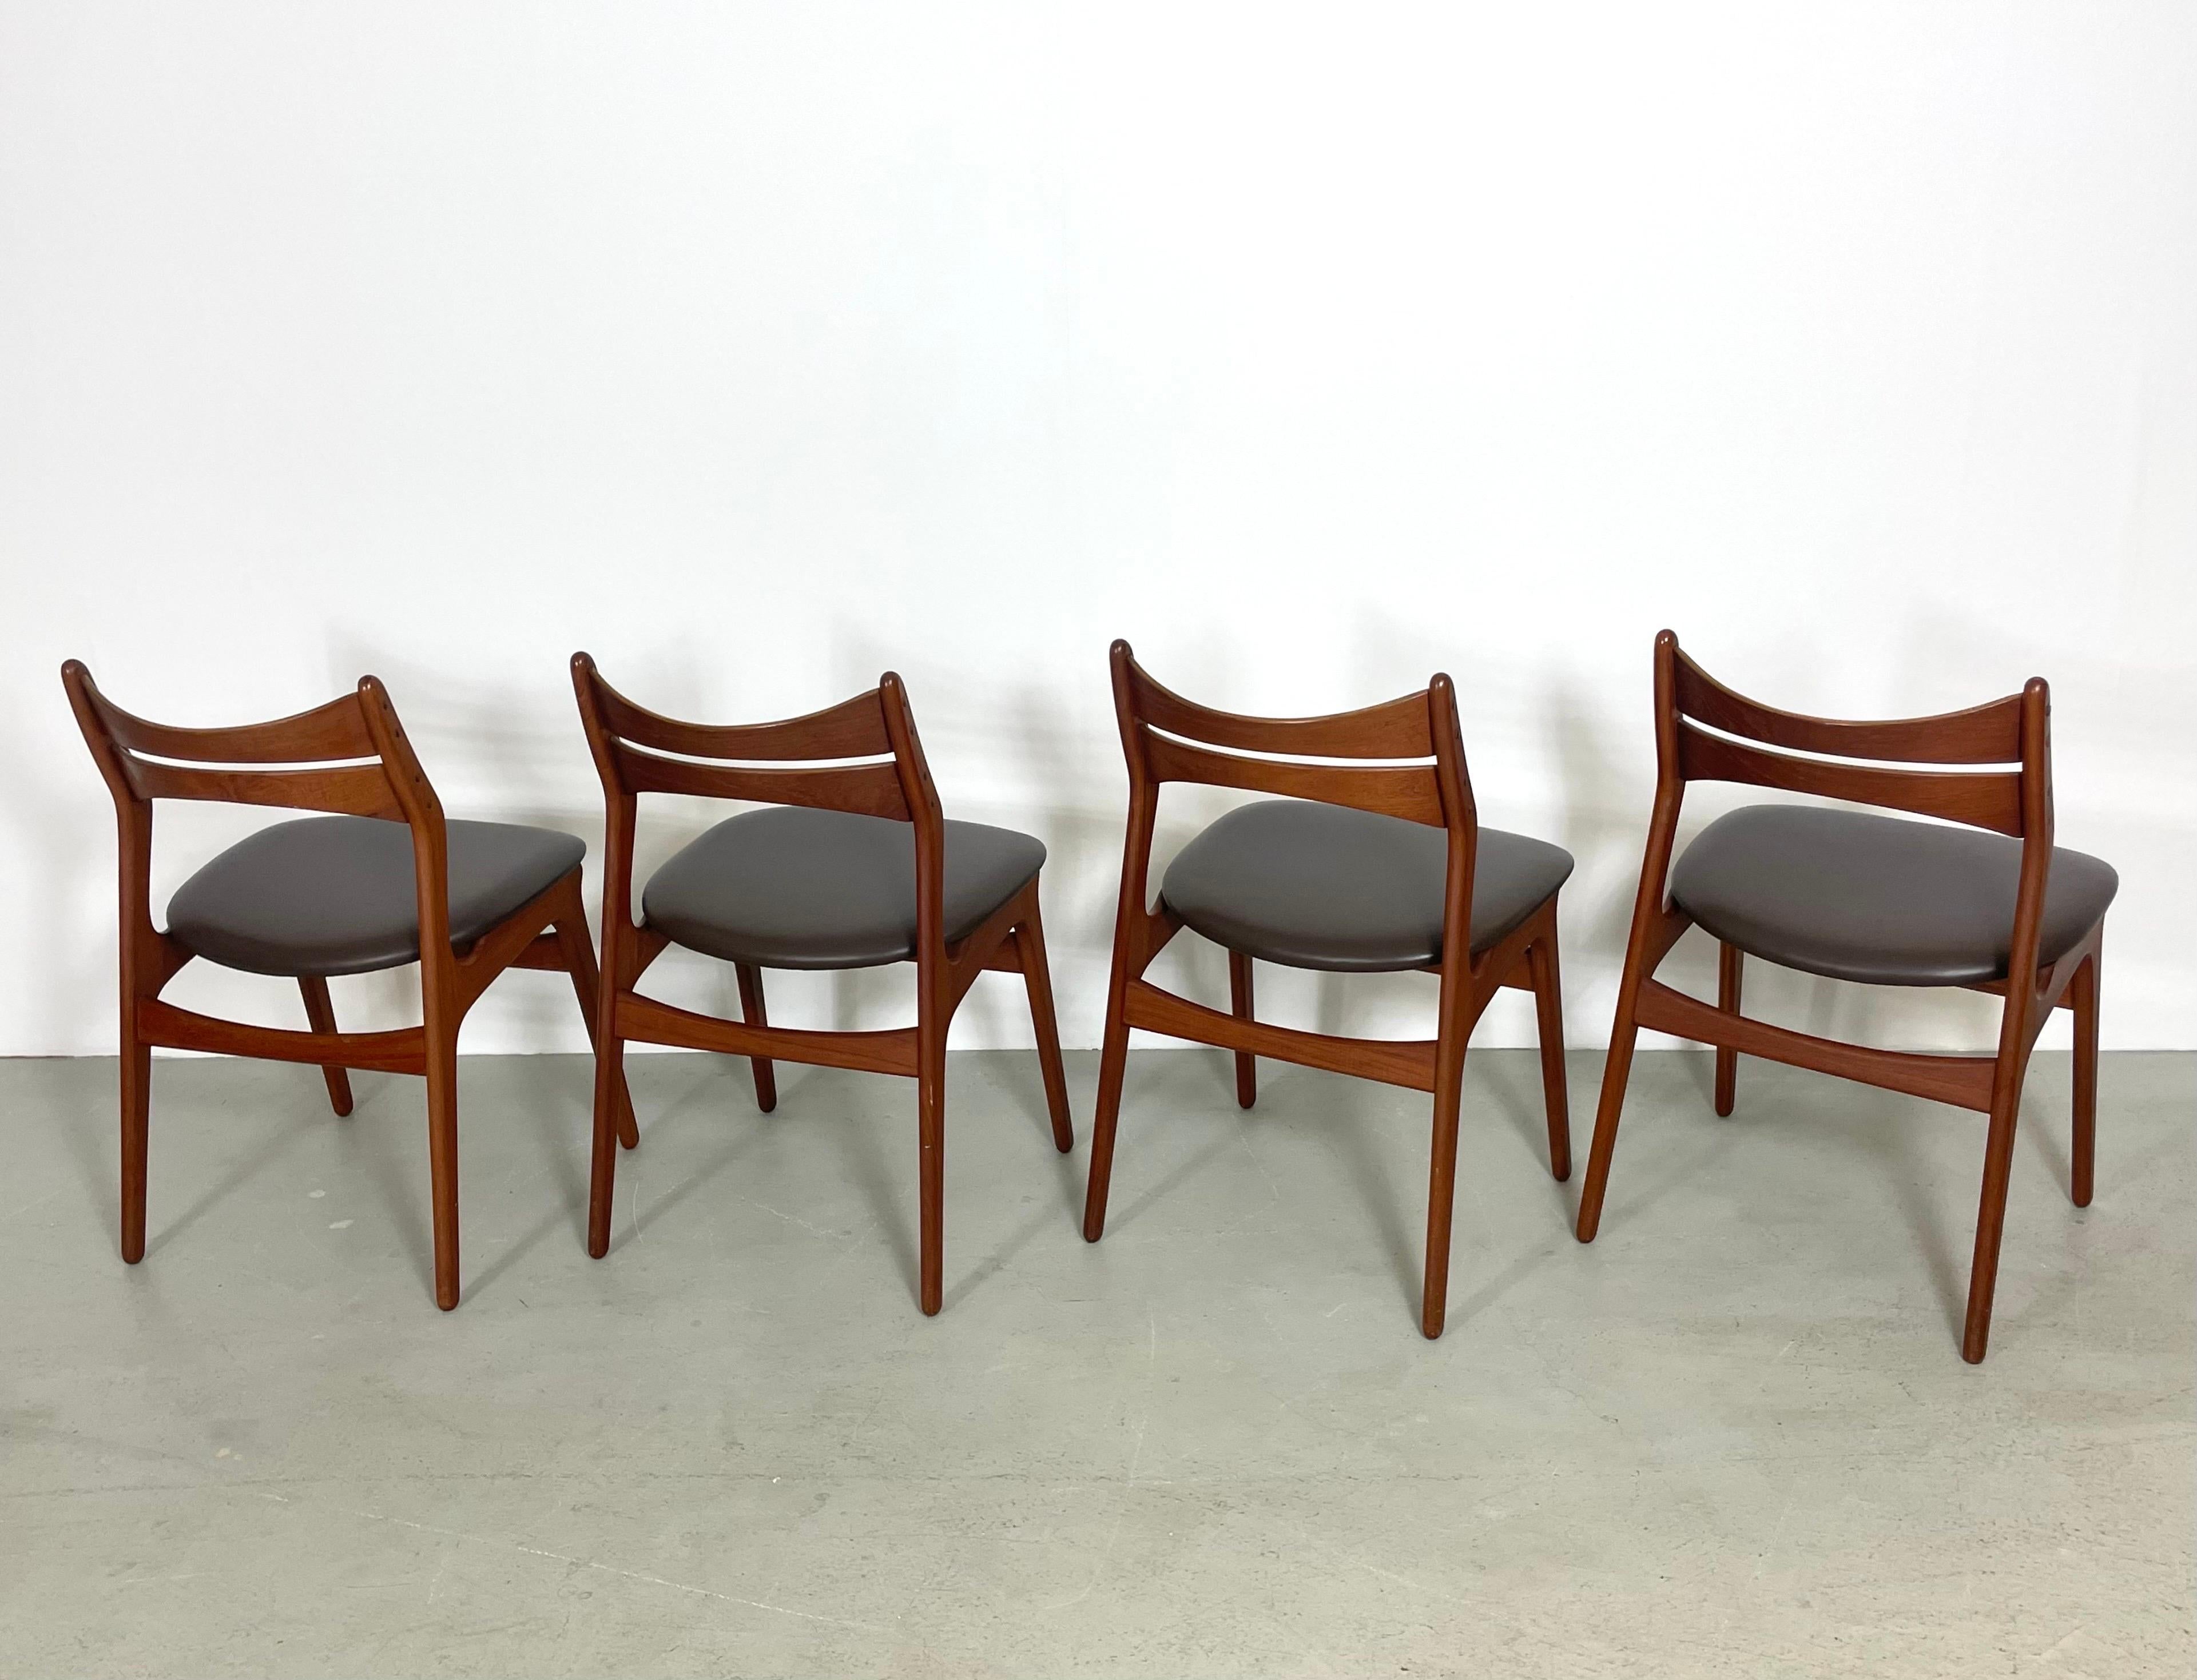 20th Century Skandinavian Teak Dining Chairs by Erik Buch, Denmark 1950s For Sale